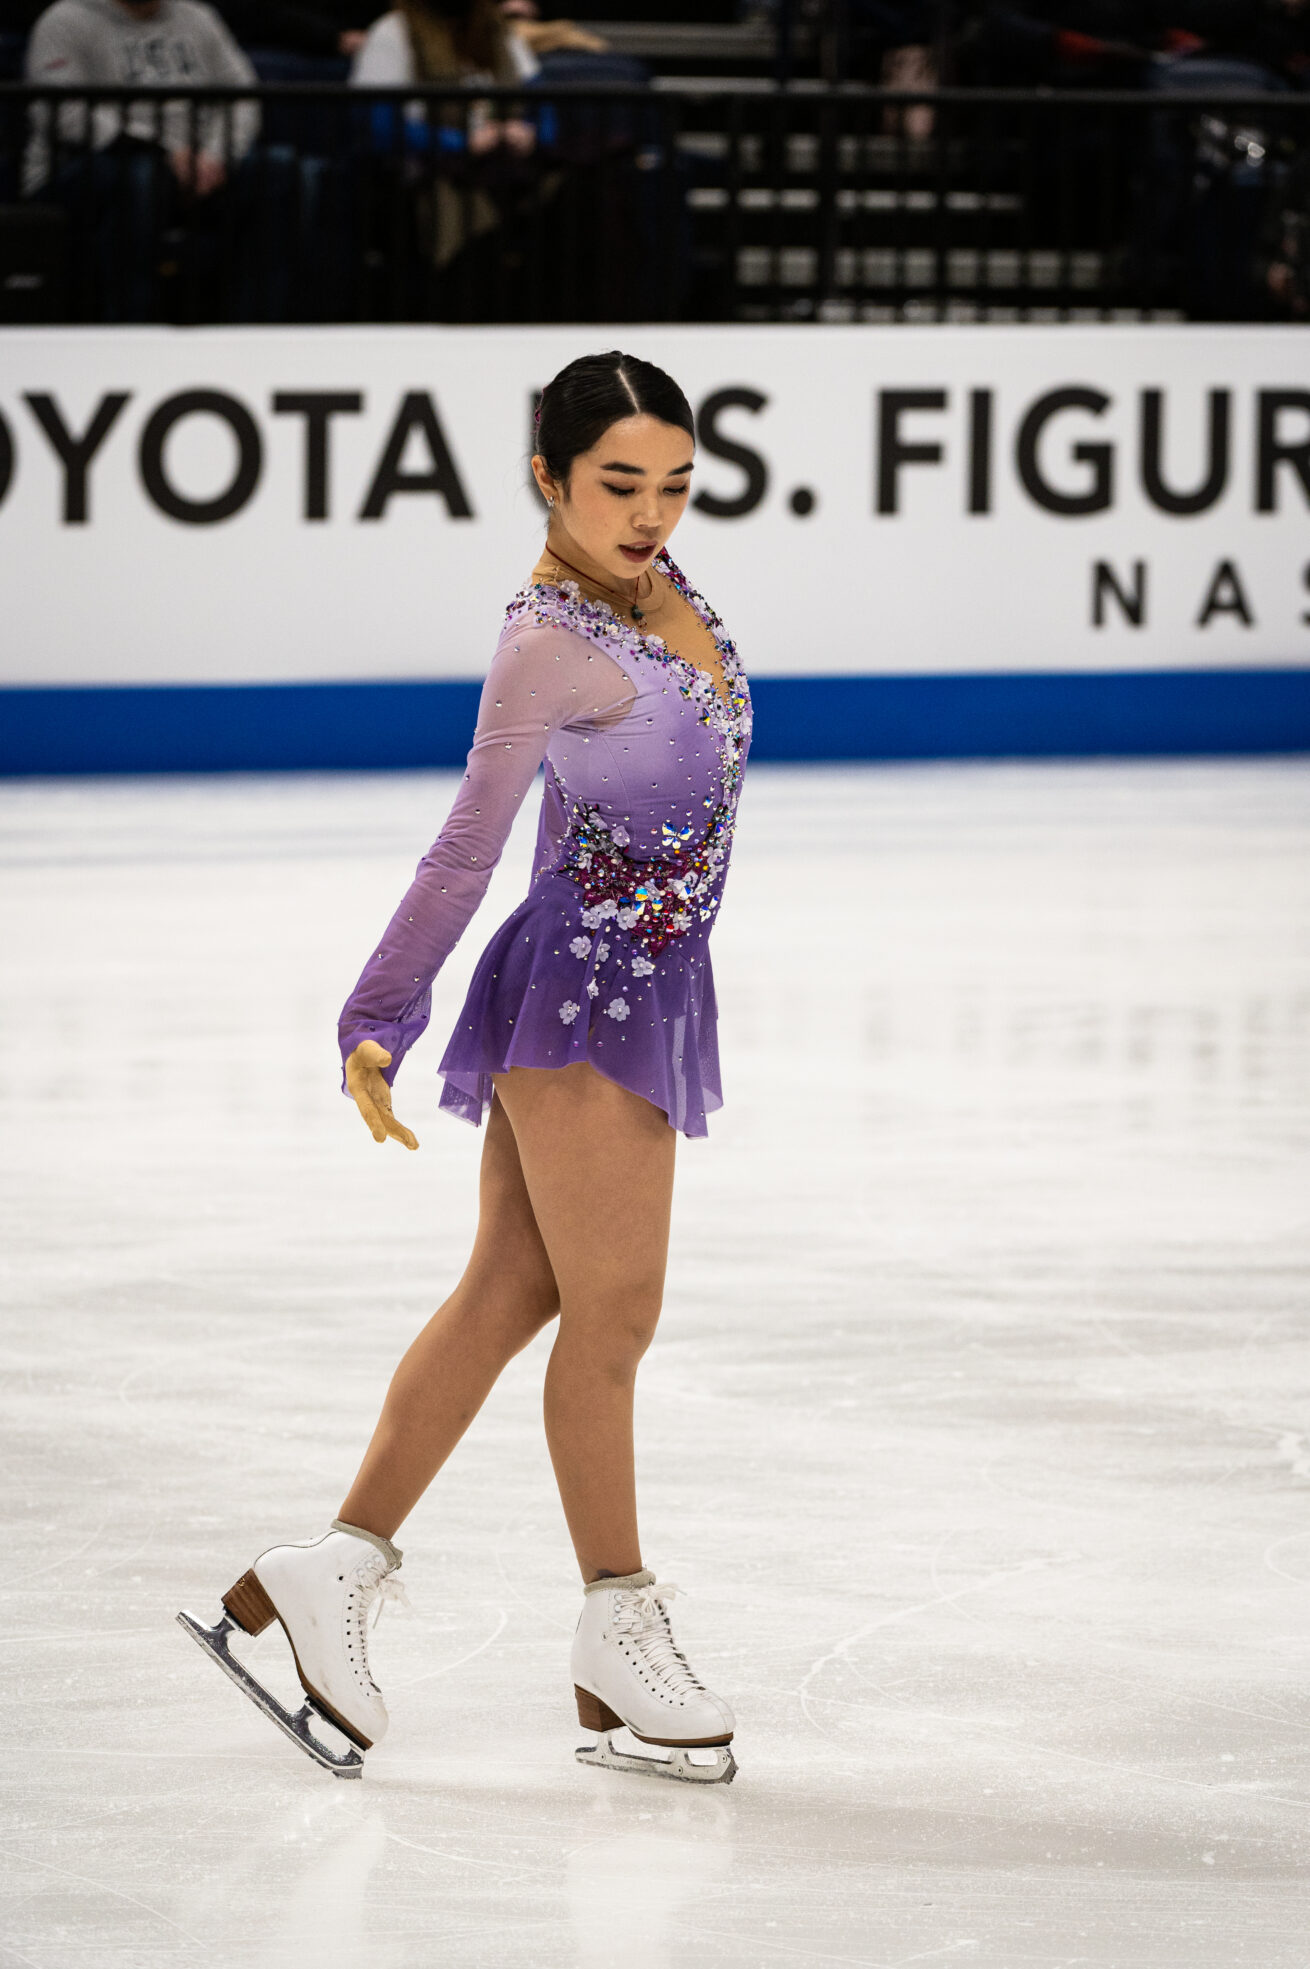 6 Karen Chen Nasvhille US Figure Skating-3060